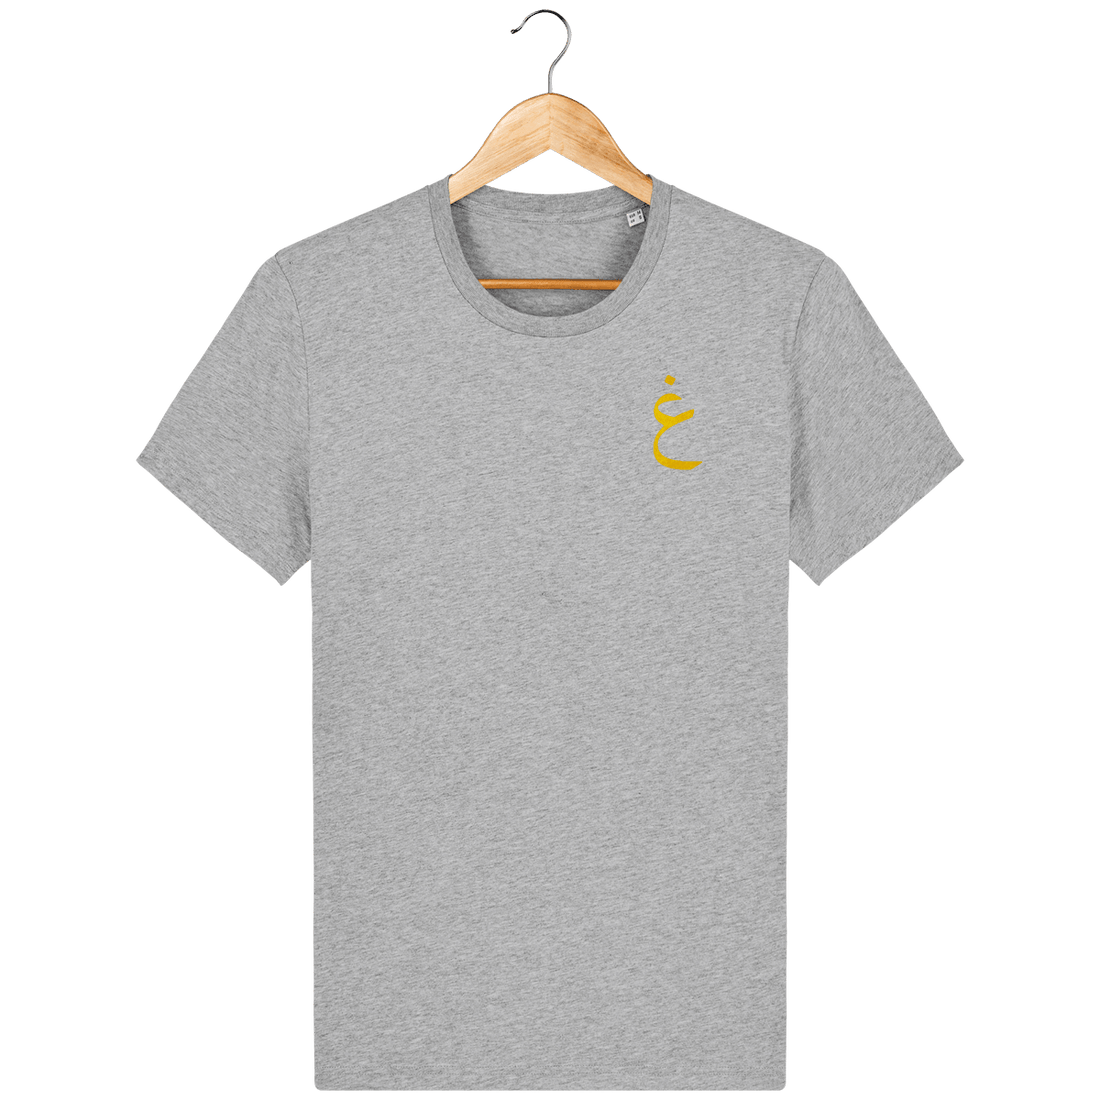 Unisexe>Tee-shirts - T-Shirt Homme <br> Lettre Arabe Ghayn